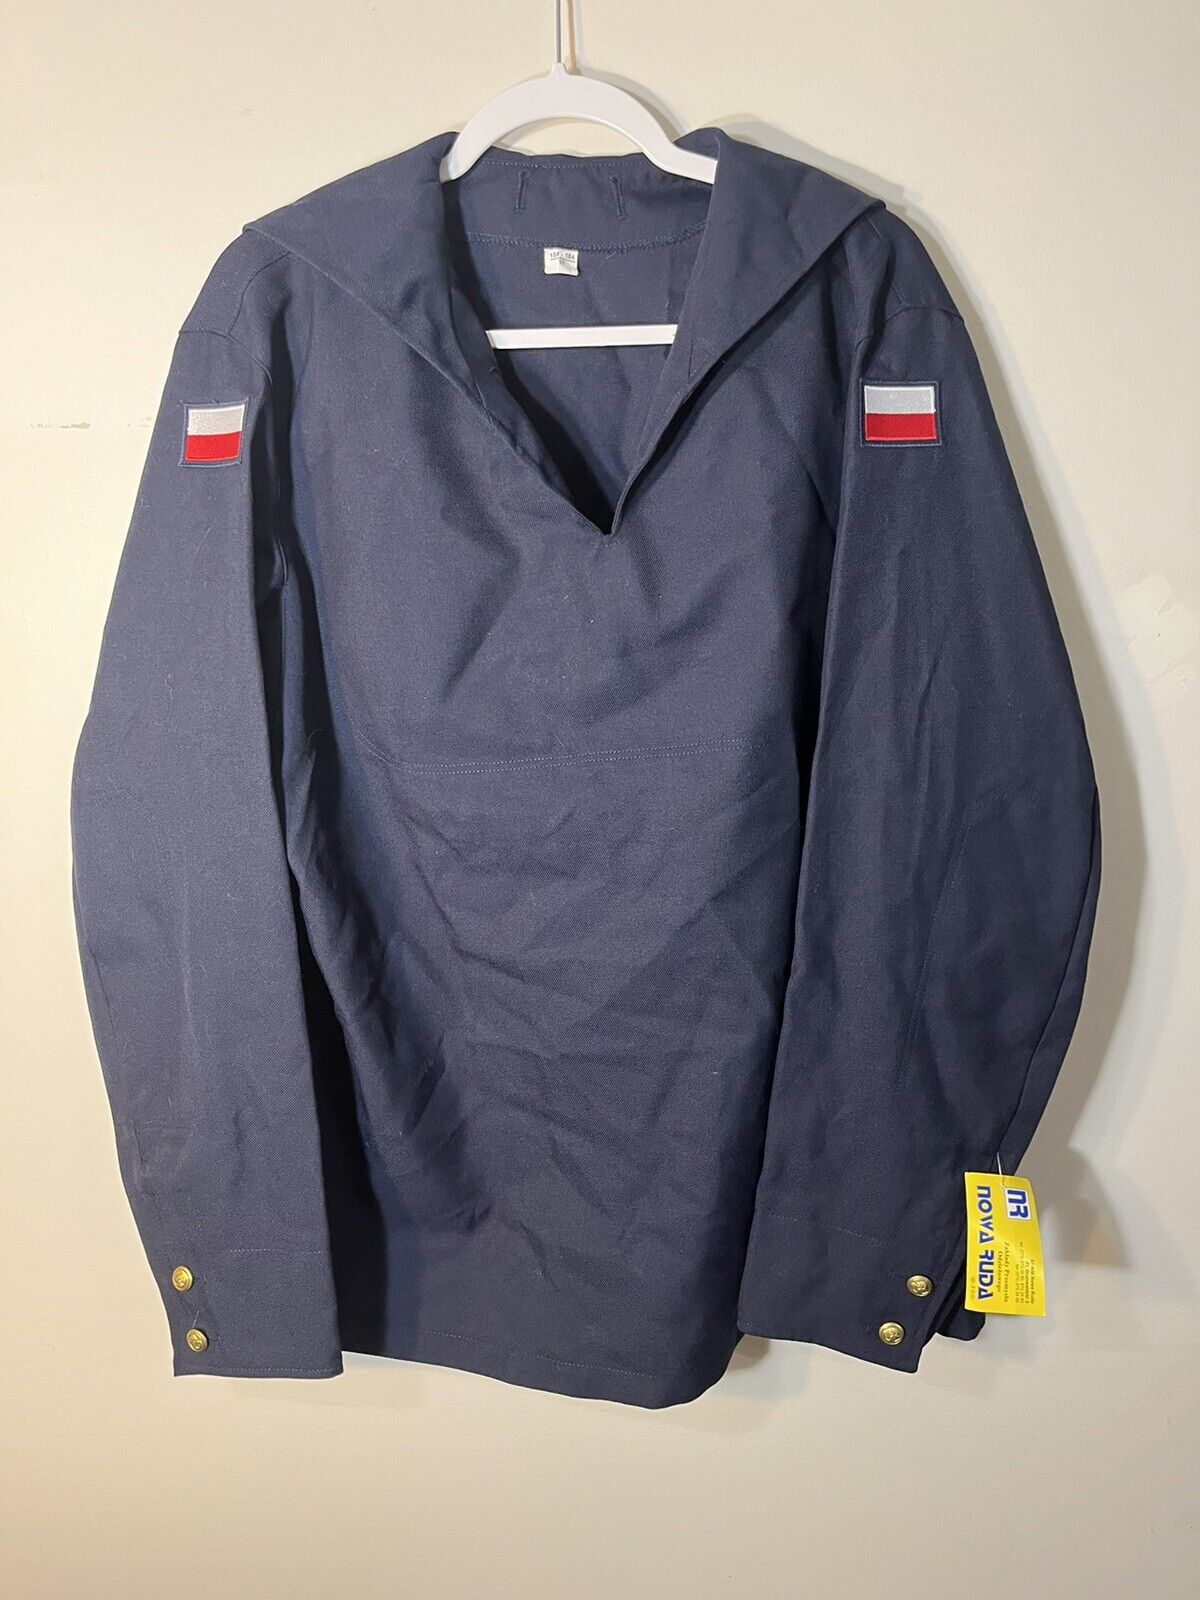 Polish Navy Middy Jacket / Shirt Naval Sailor Military Surplus Uniform Med-Large